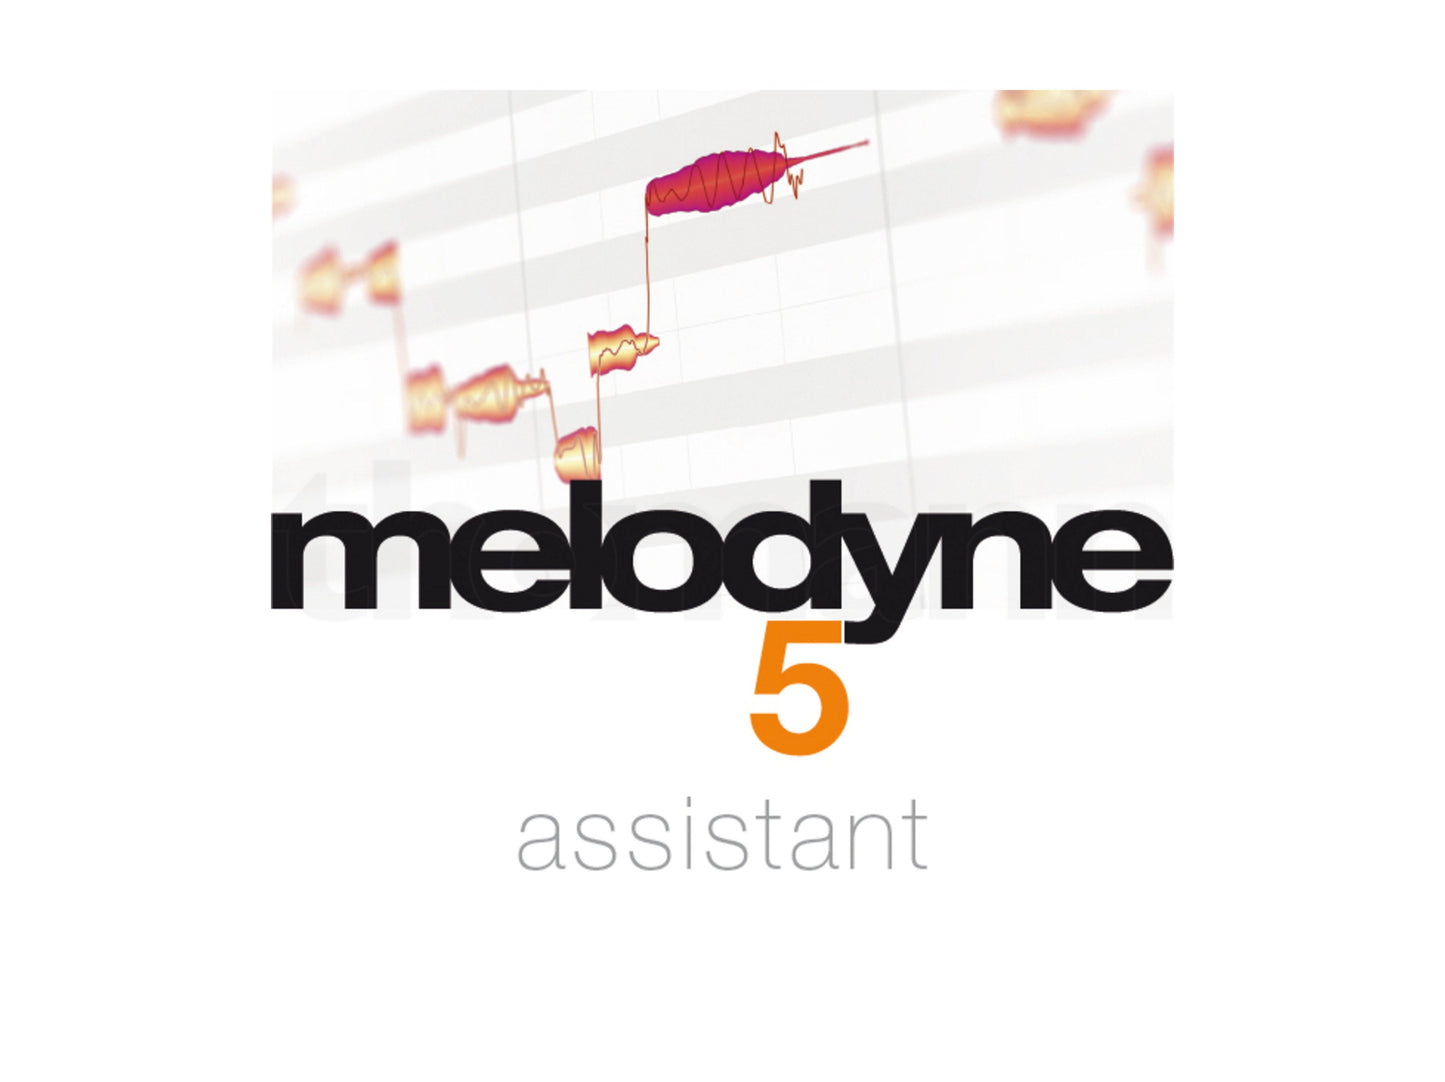 Celemony Melodyne 5 Assistant - Arda Suppliers